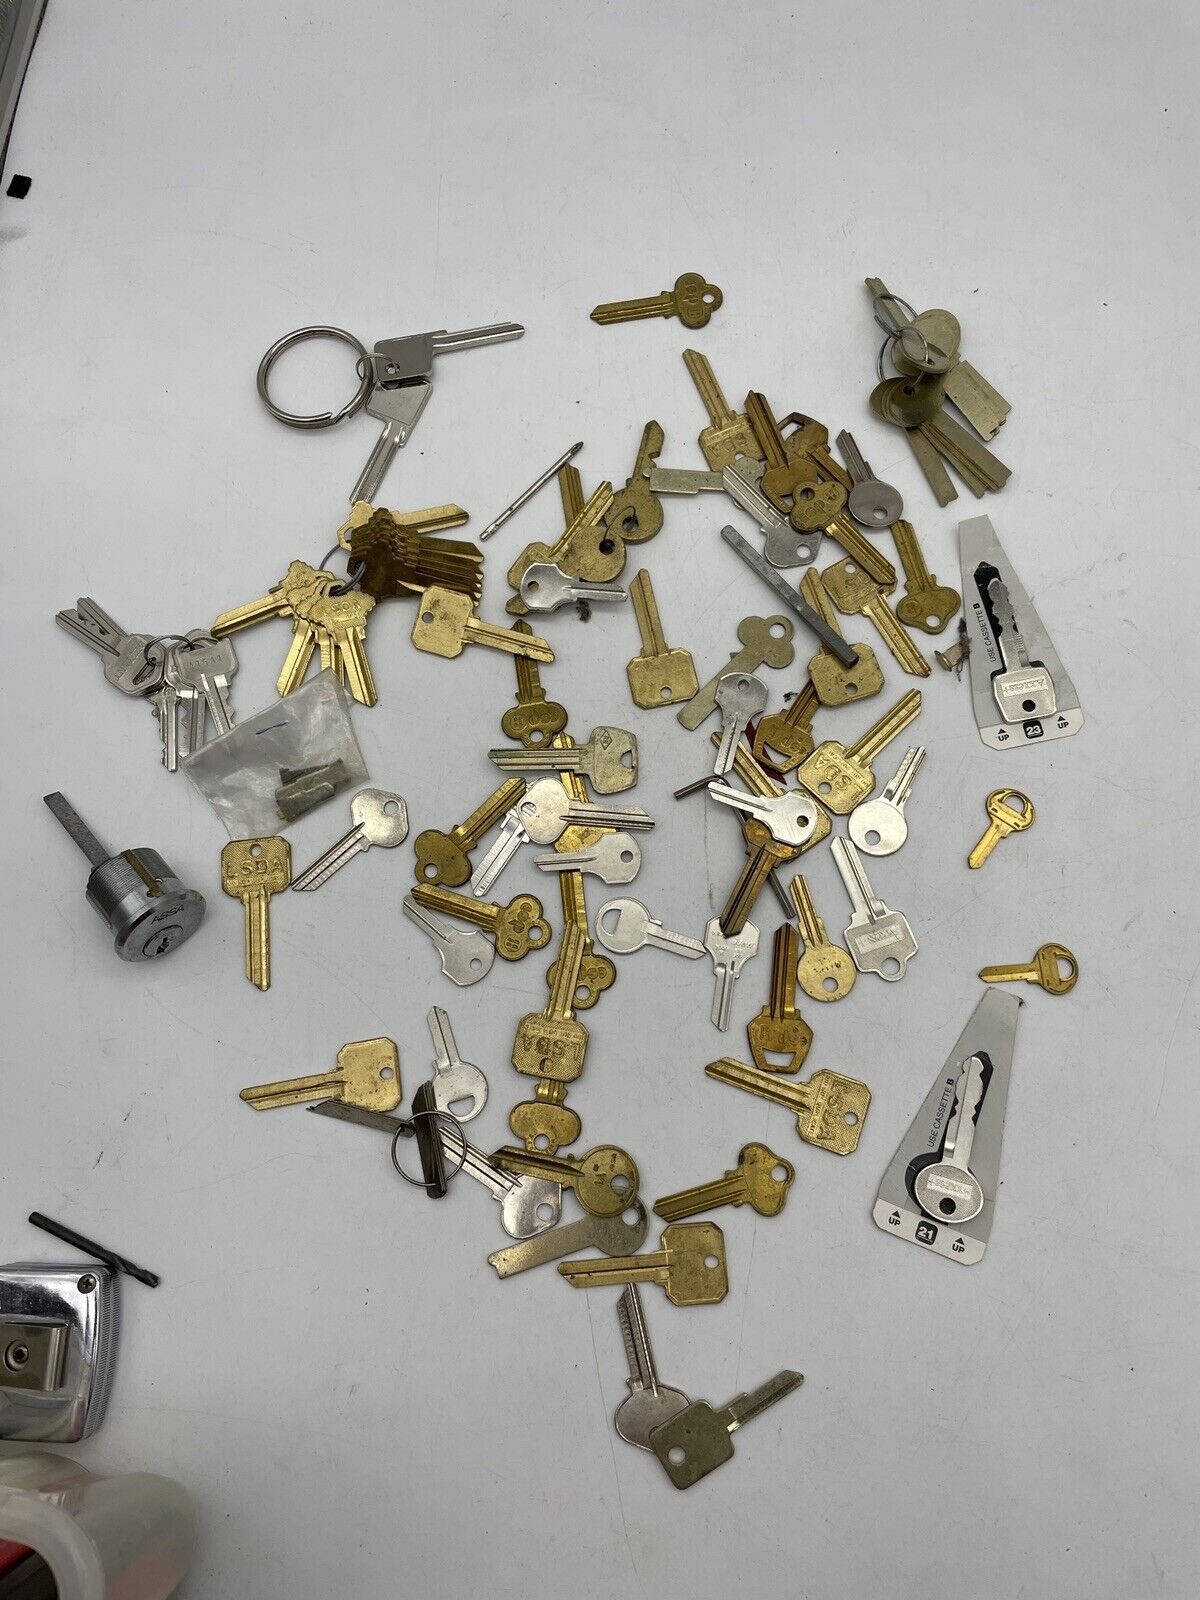 70+ Vintage Mostly Uncut Keys ESP LSDA ASSA Honda 2.5lbs